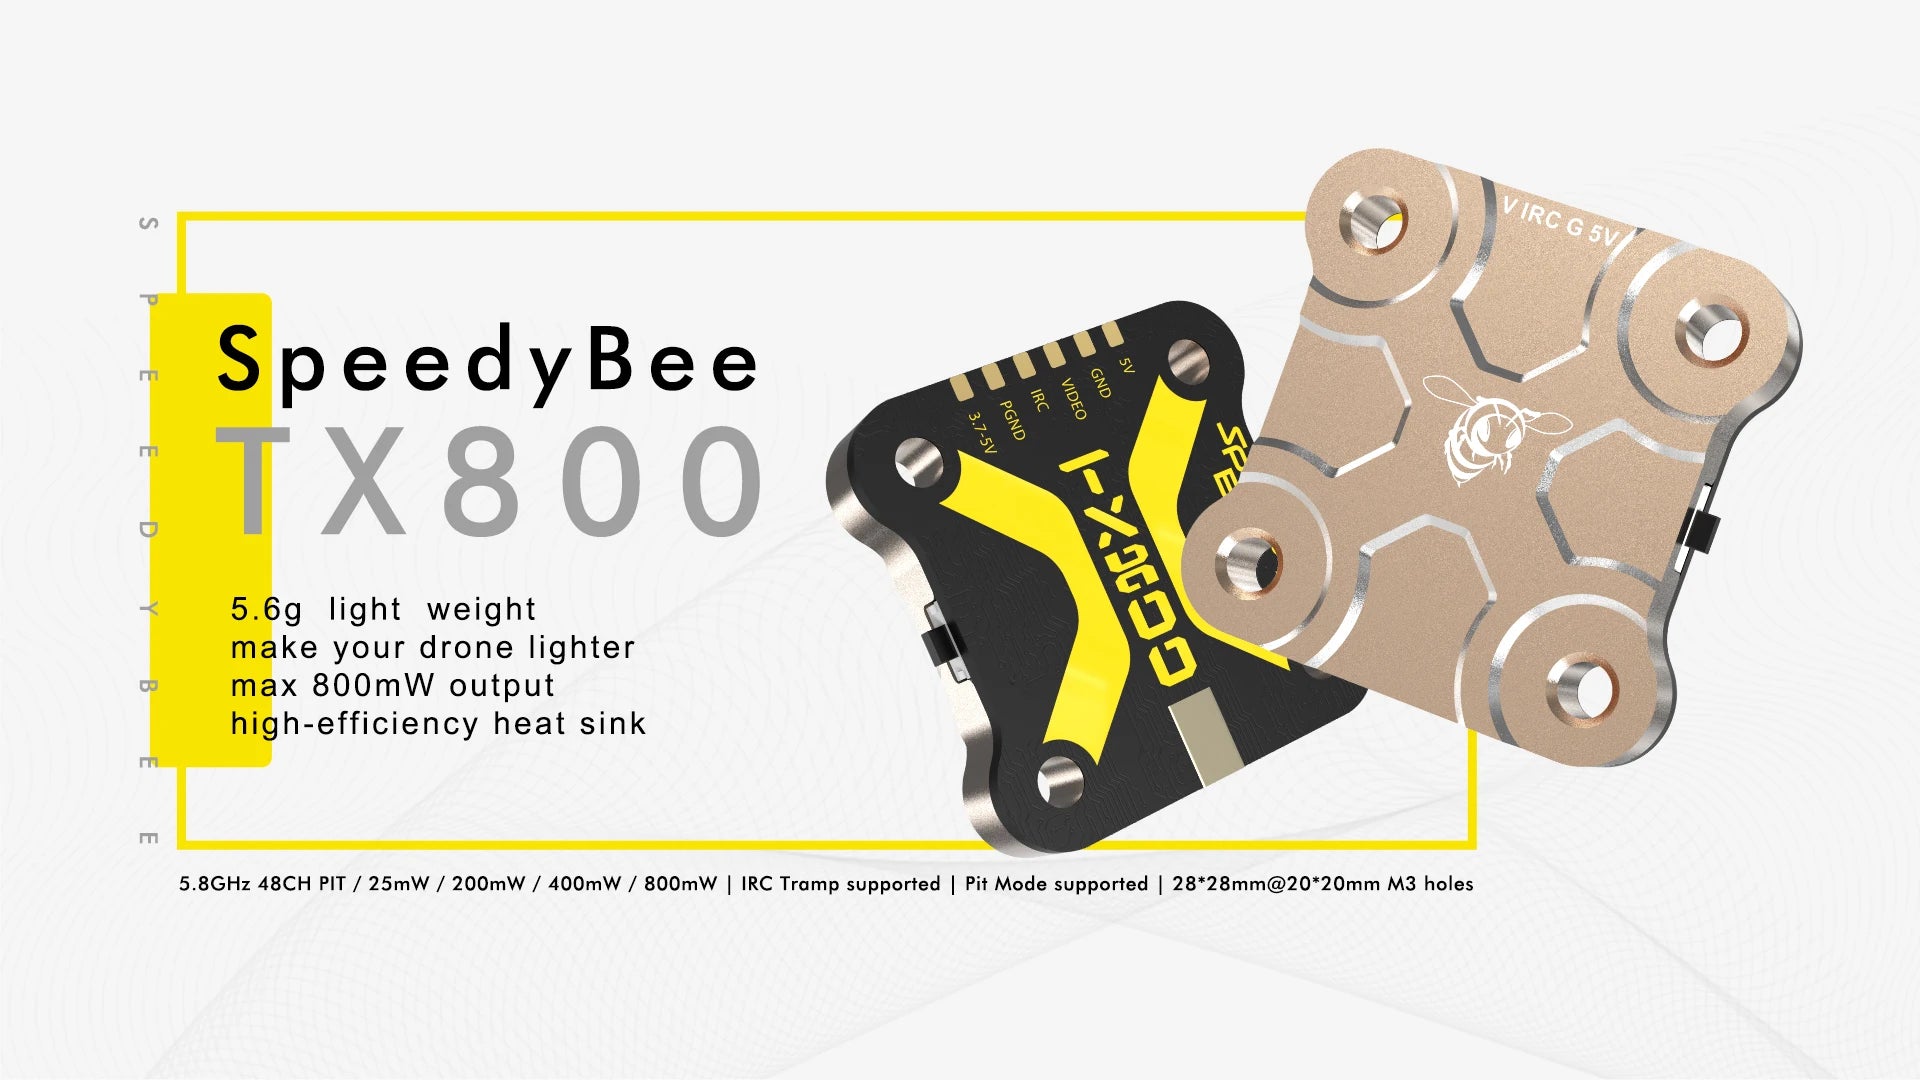 SpeedyBee TX800 5.8G VTX, G SpeedyBee 2 TX8 00 5.6g light weight make your drone